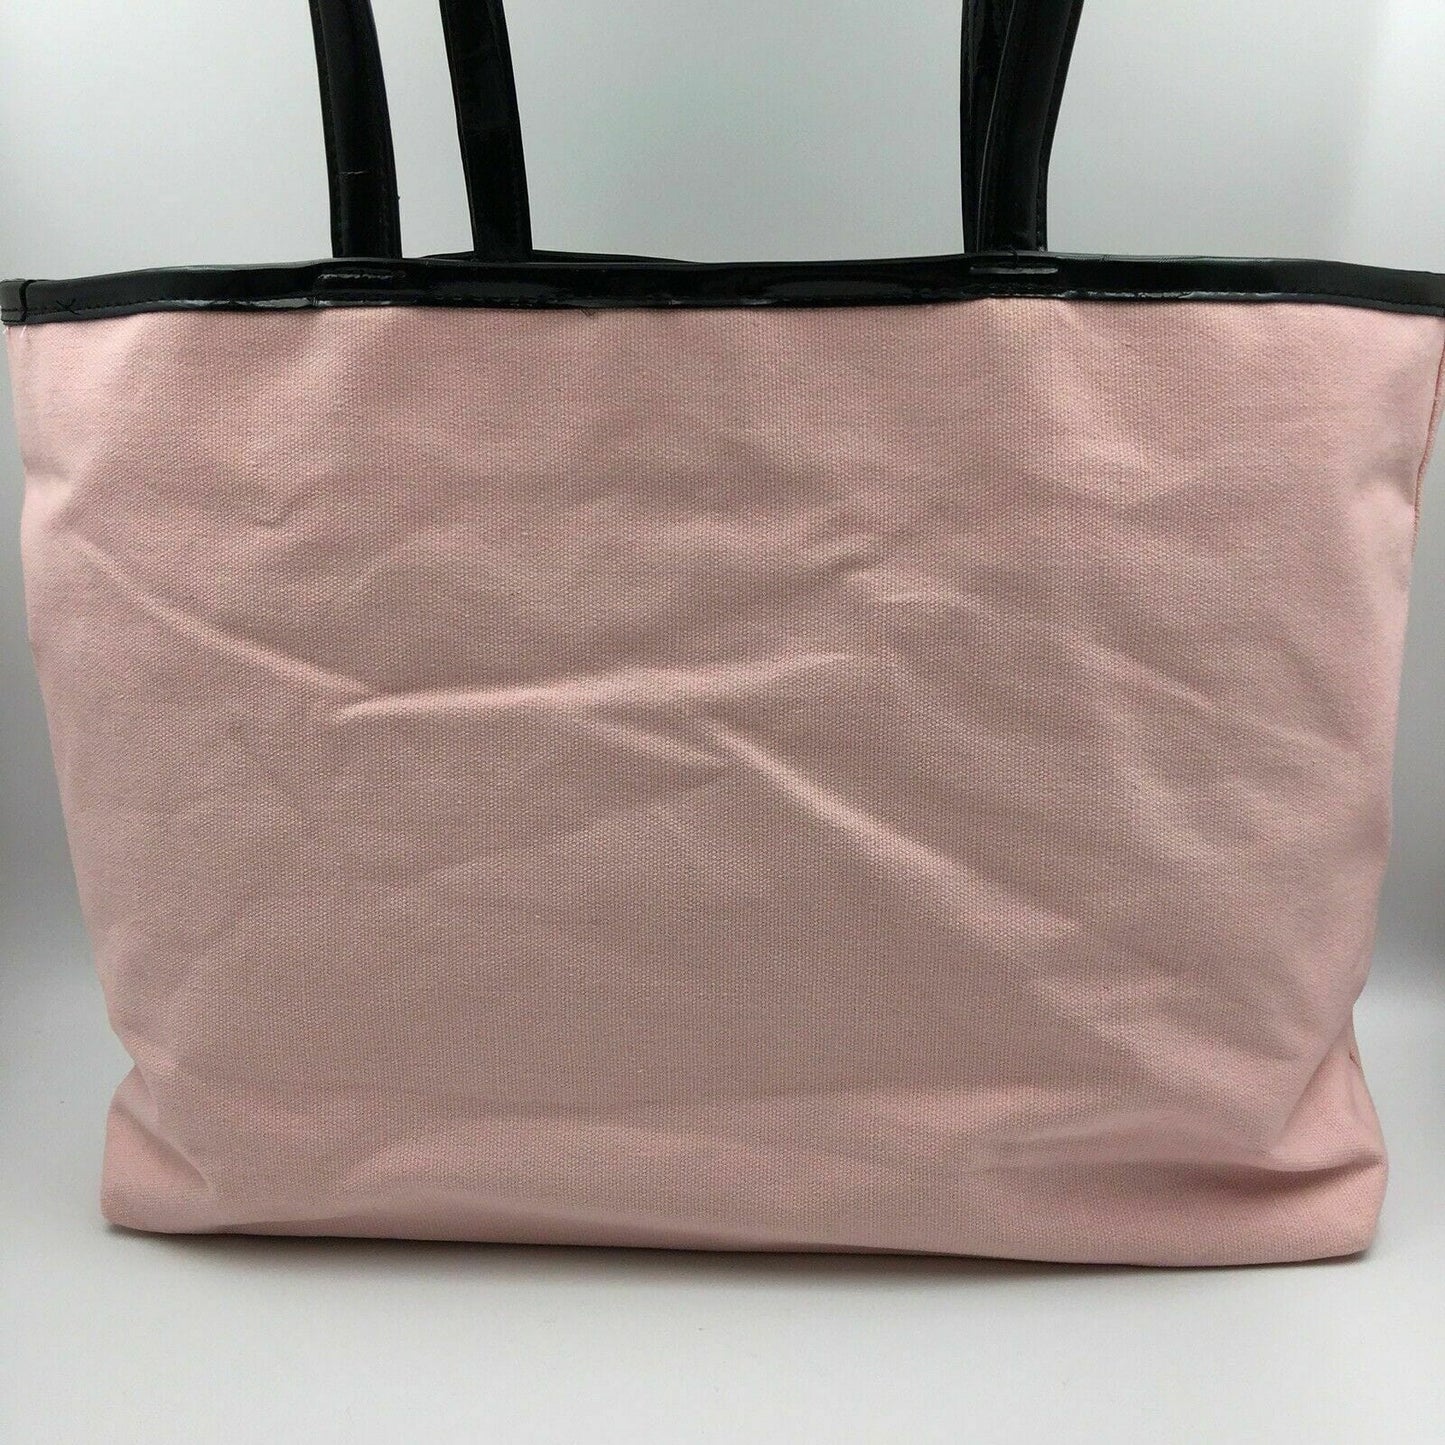 Victoria’s Secret Pale Pink W/ Black & Gold Strips Beach Tote W/ Makeup Bag